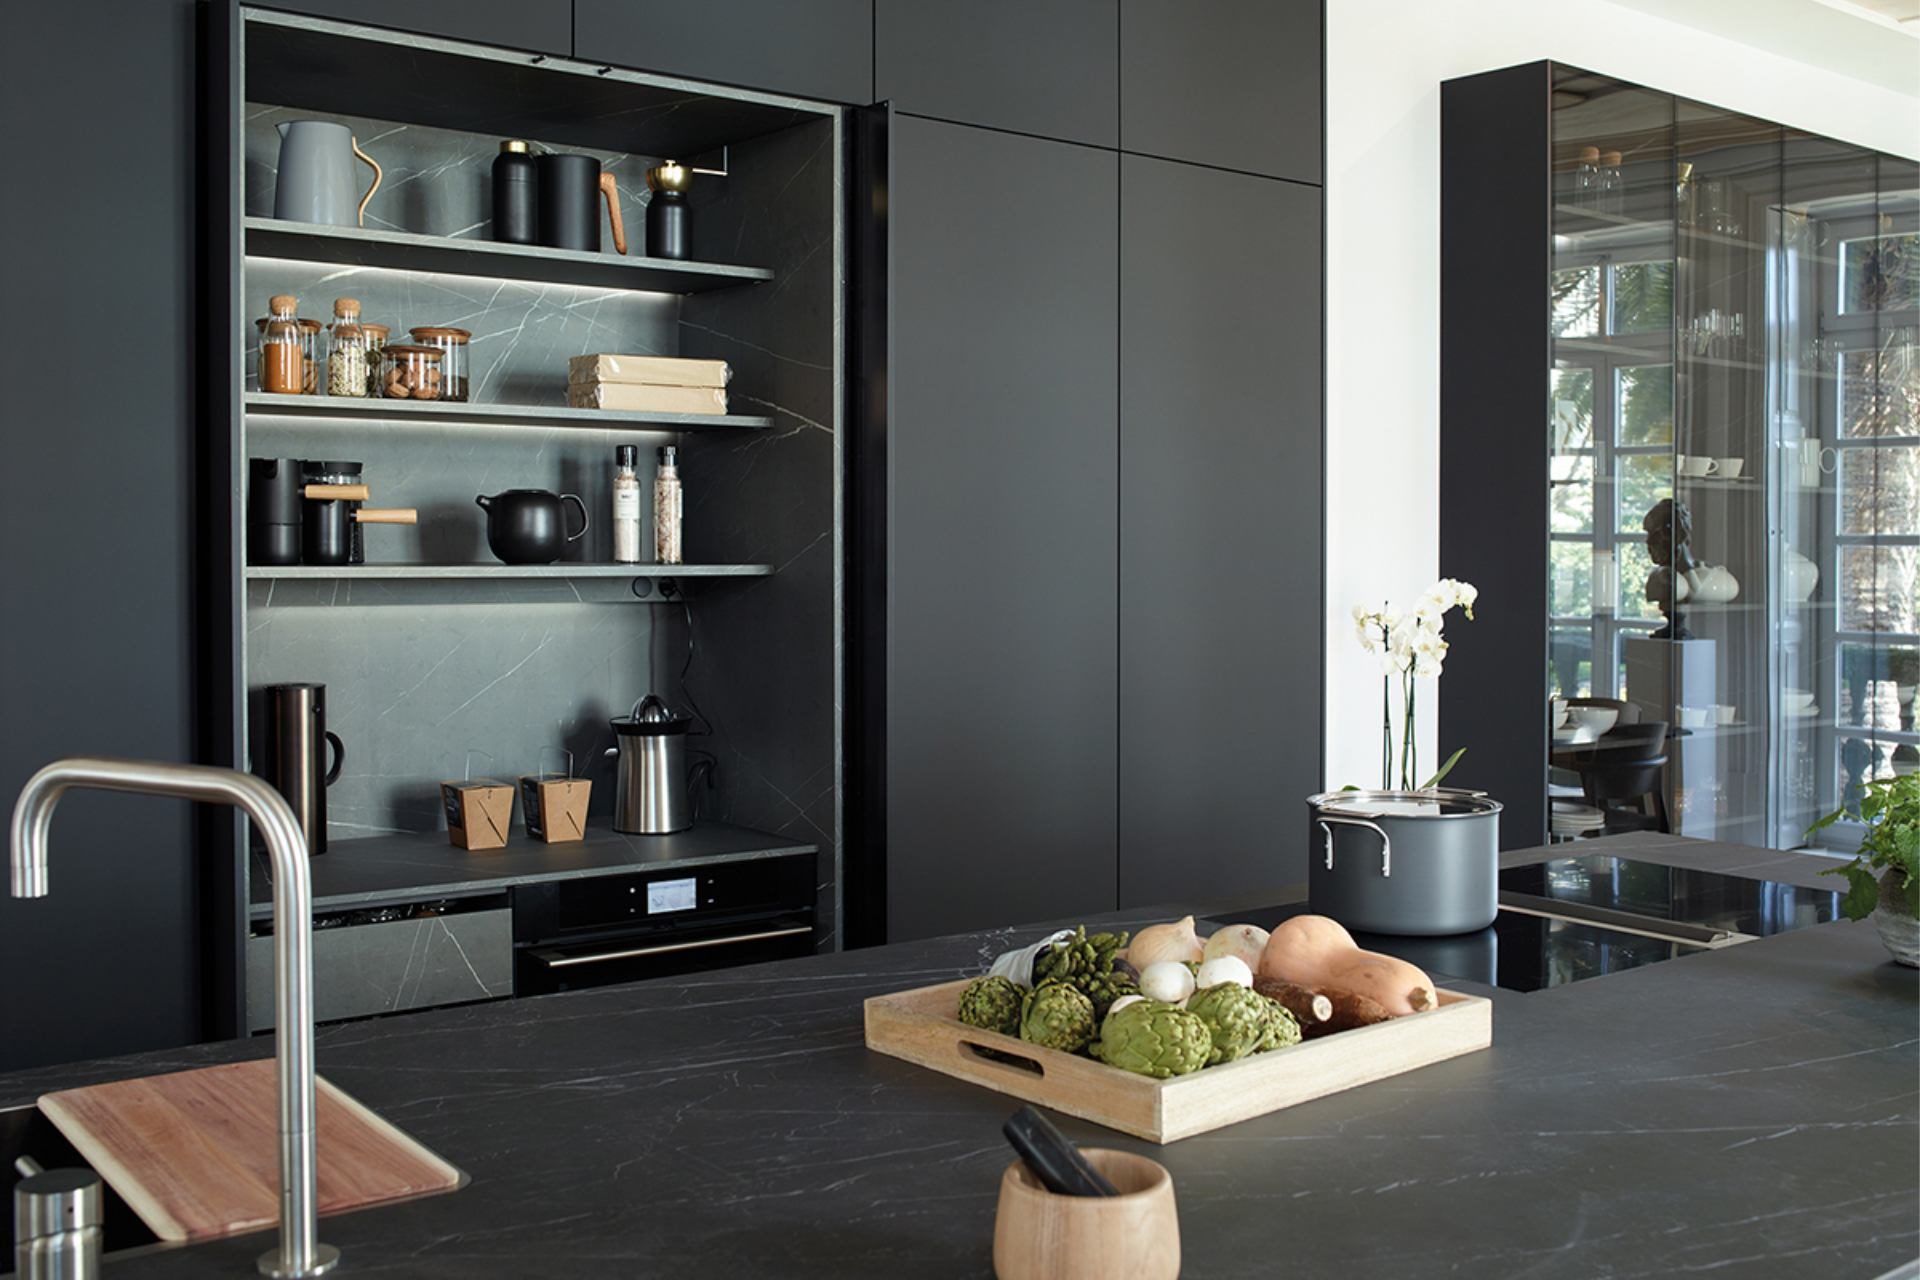 Image of kitchen with black LAH laminate column units